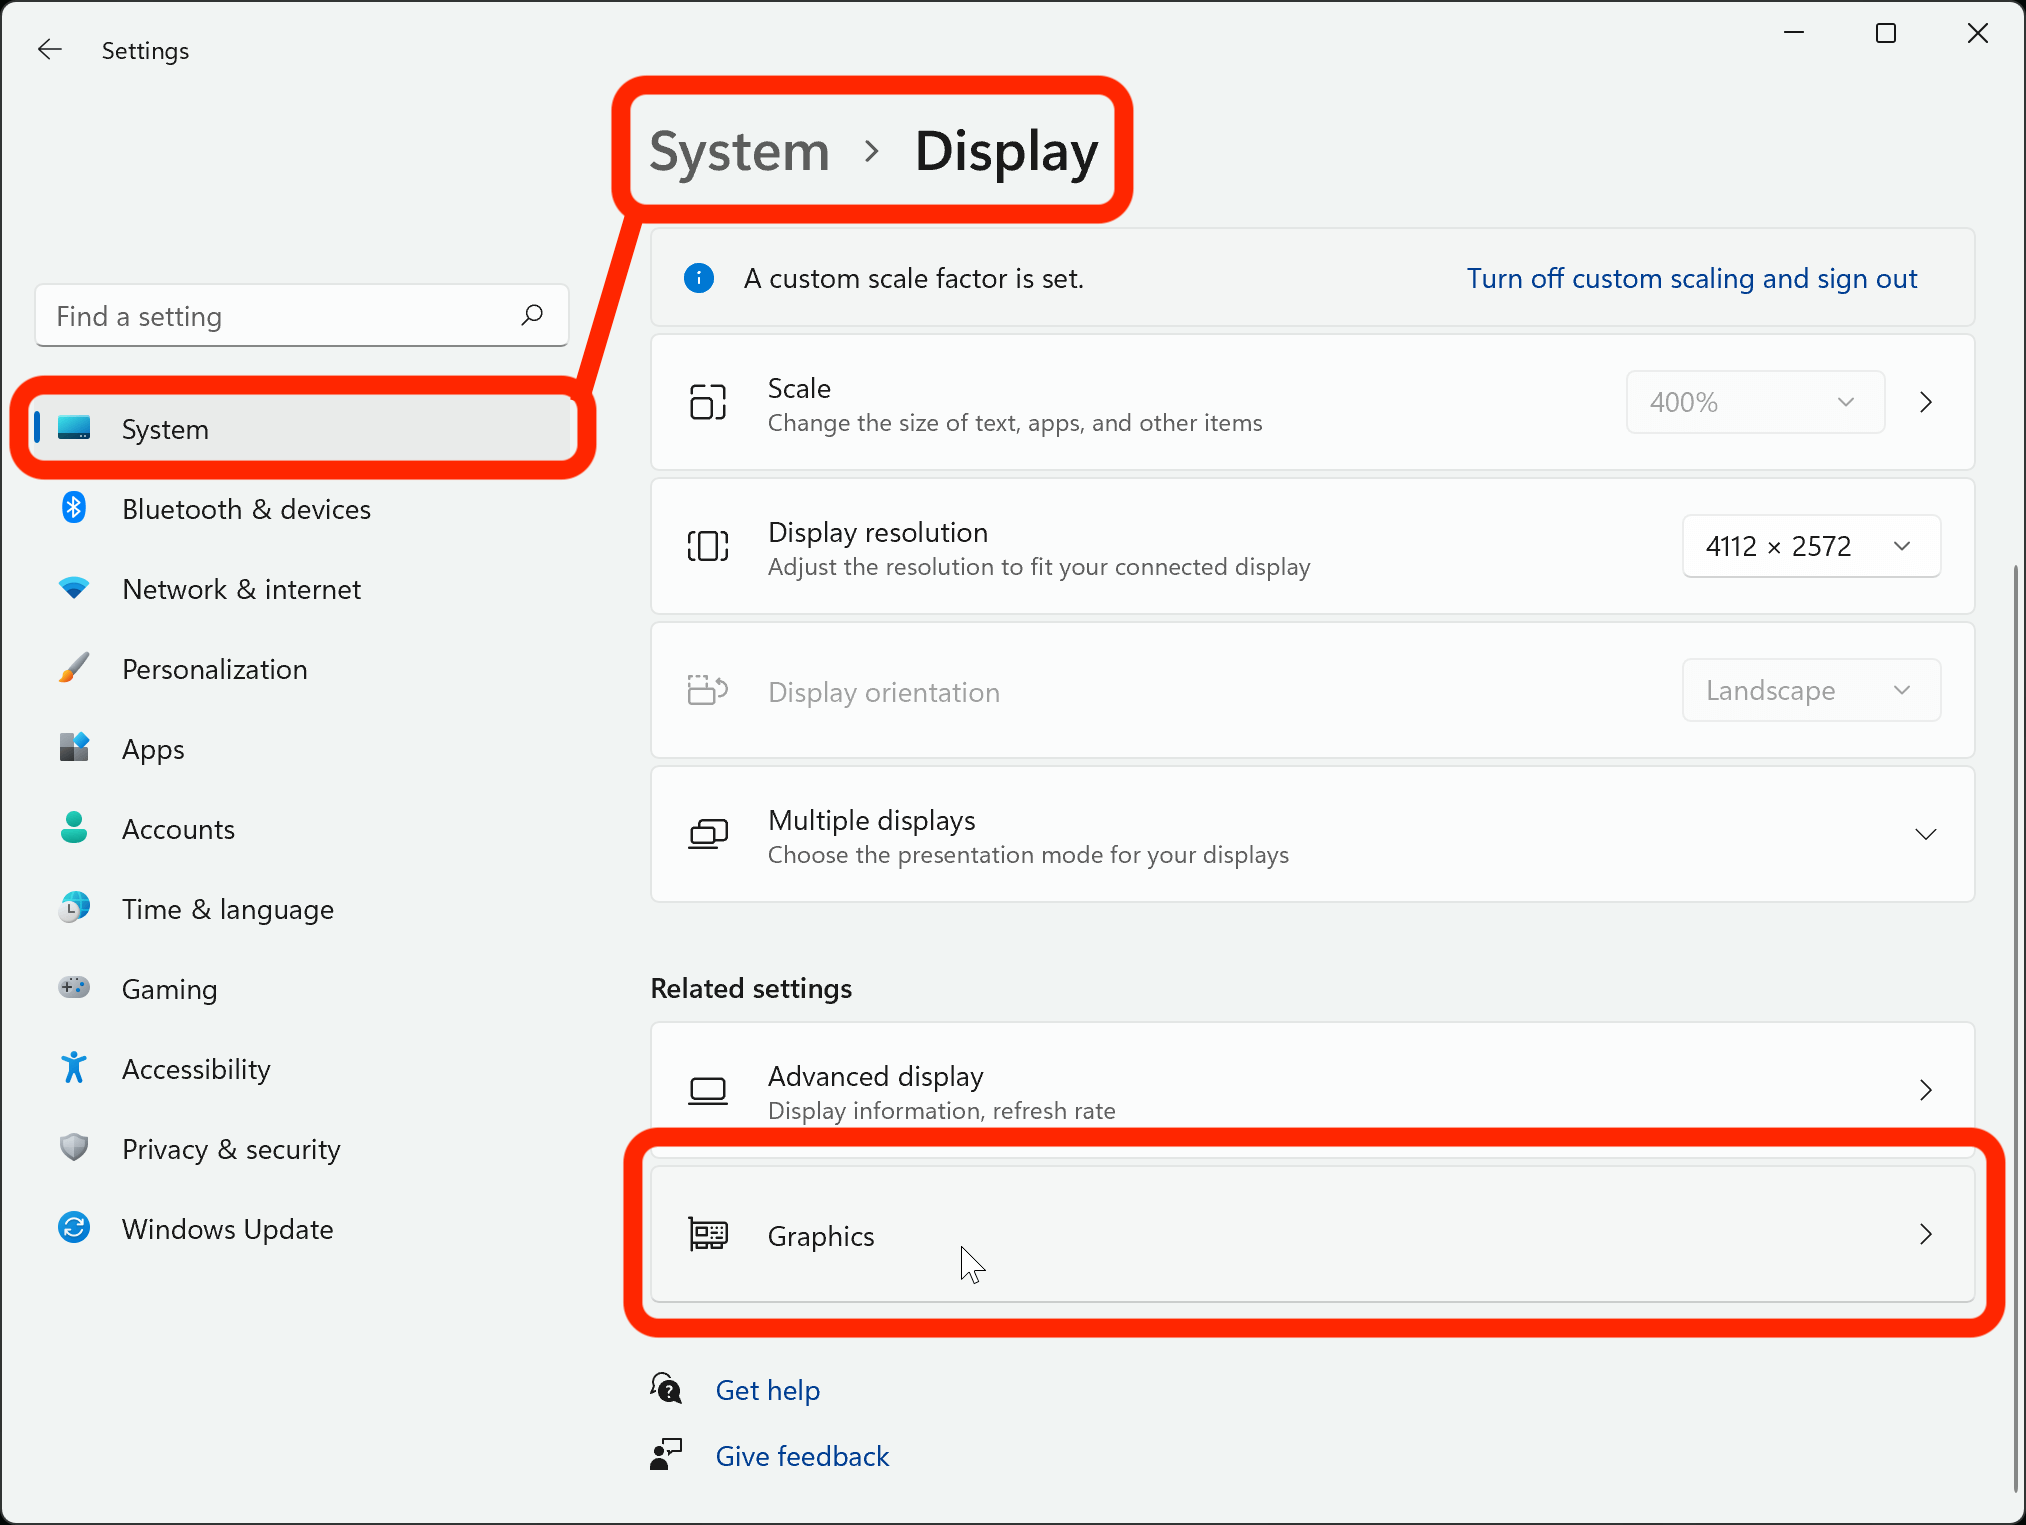 System → Display → Graphics